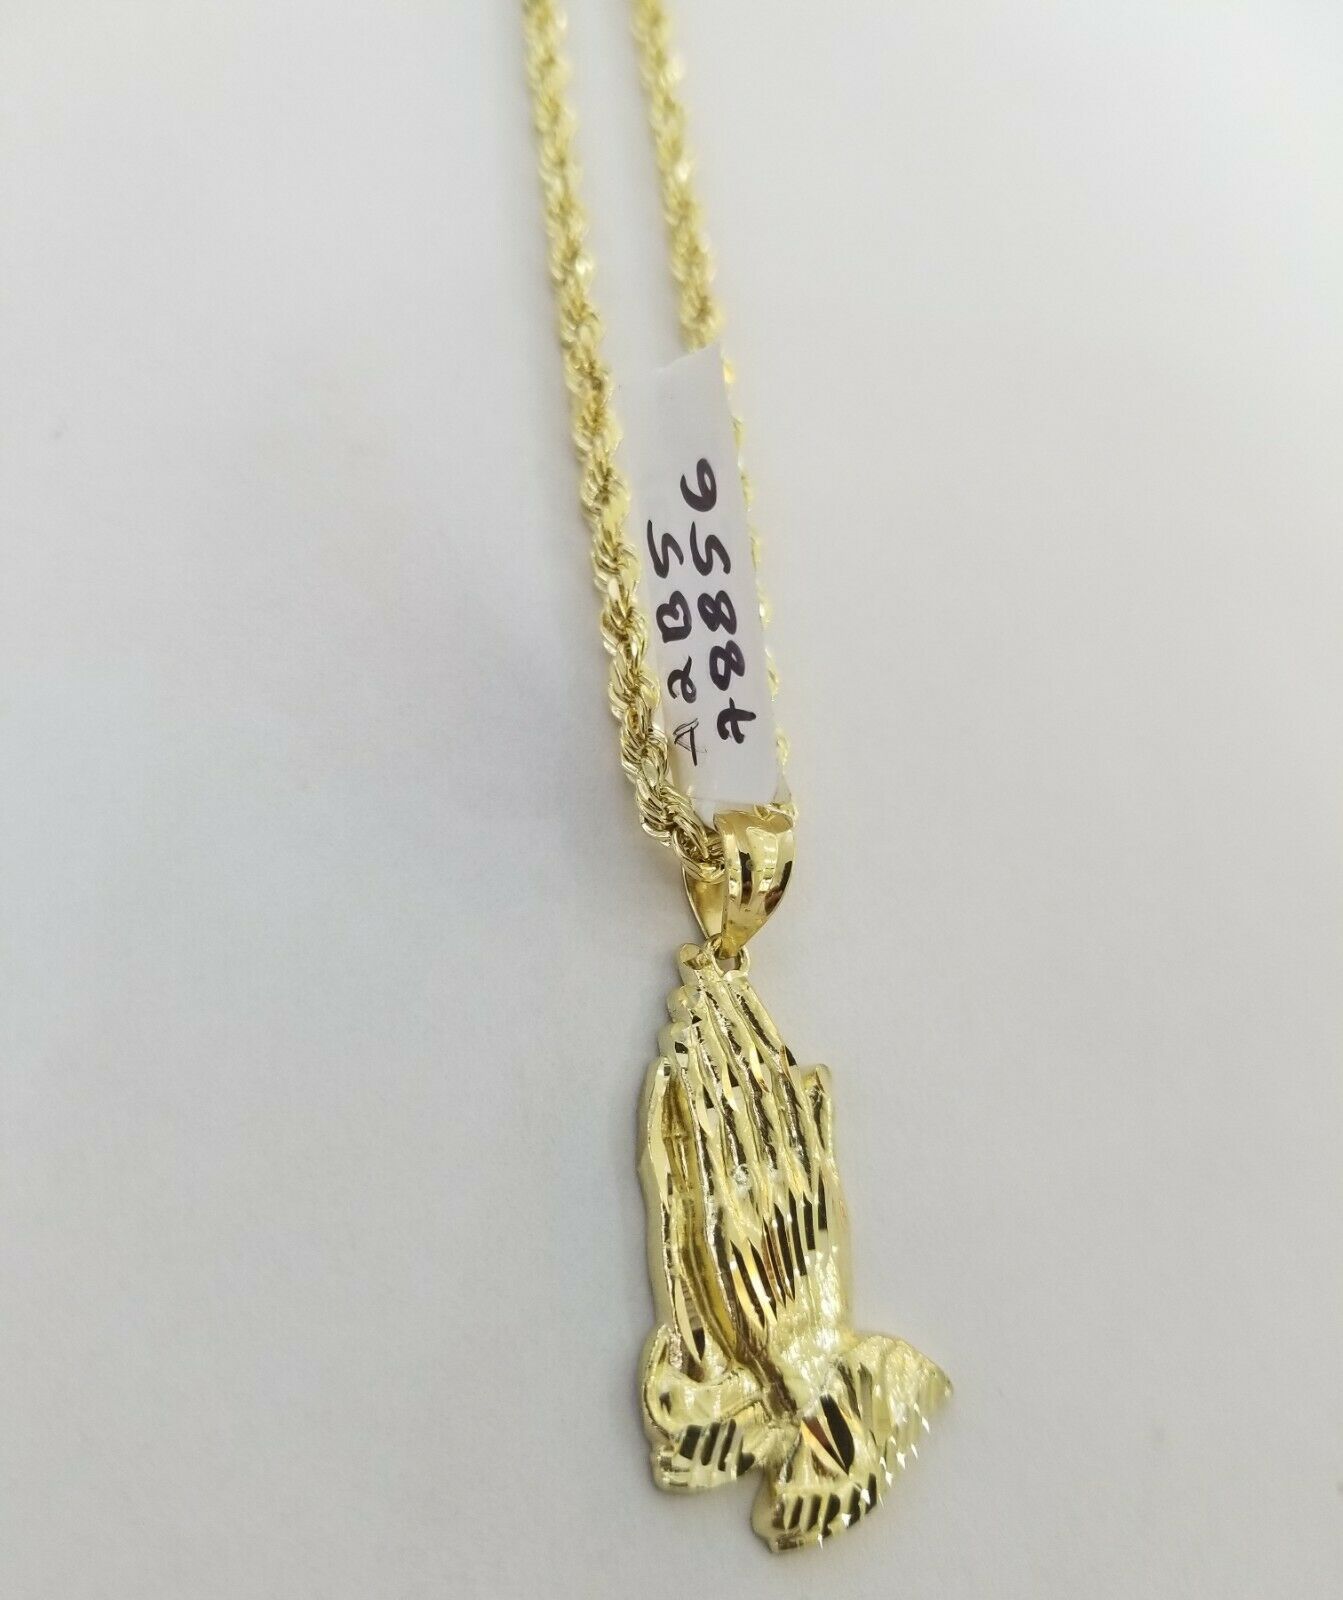 Real 10k Yellow Gold Chain & Charm Praying hand pendant , 22